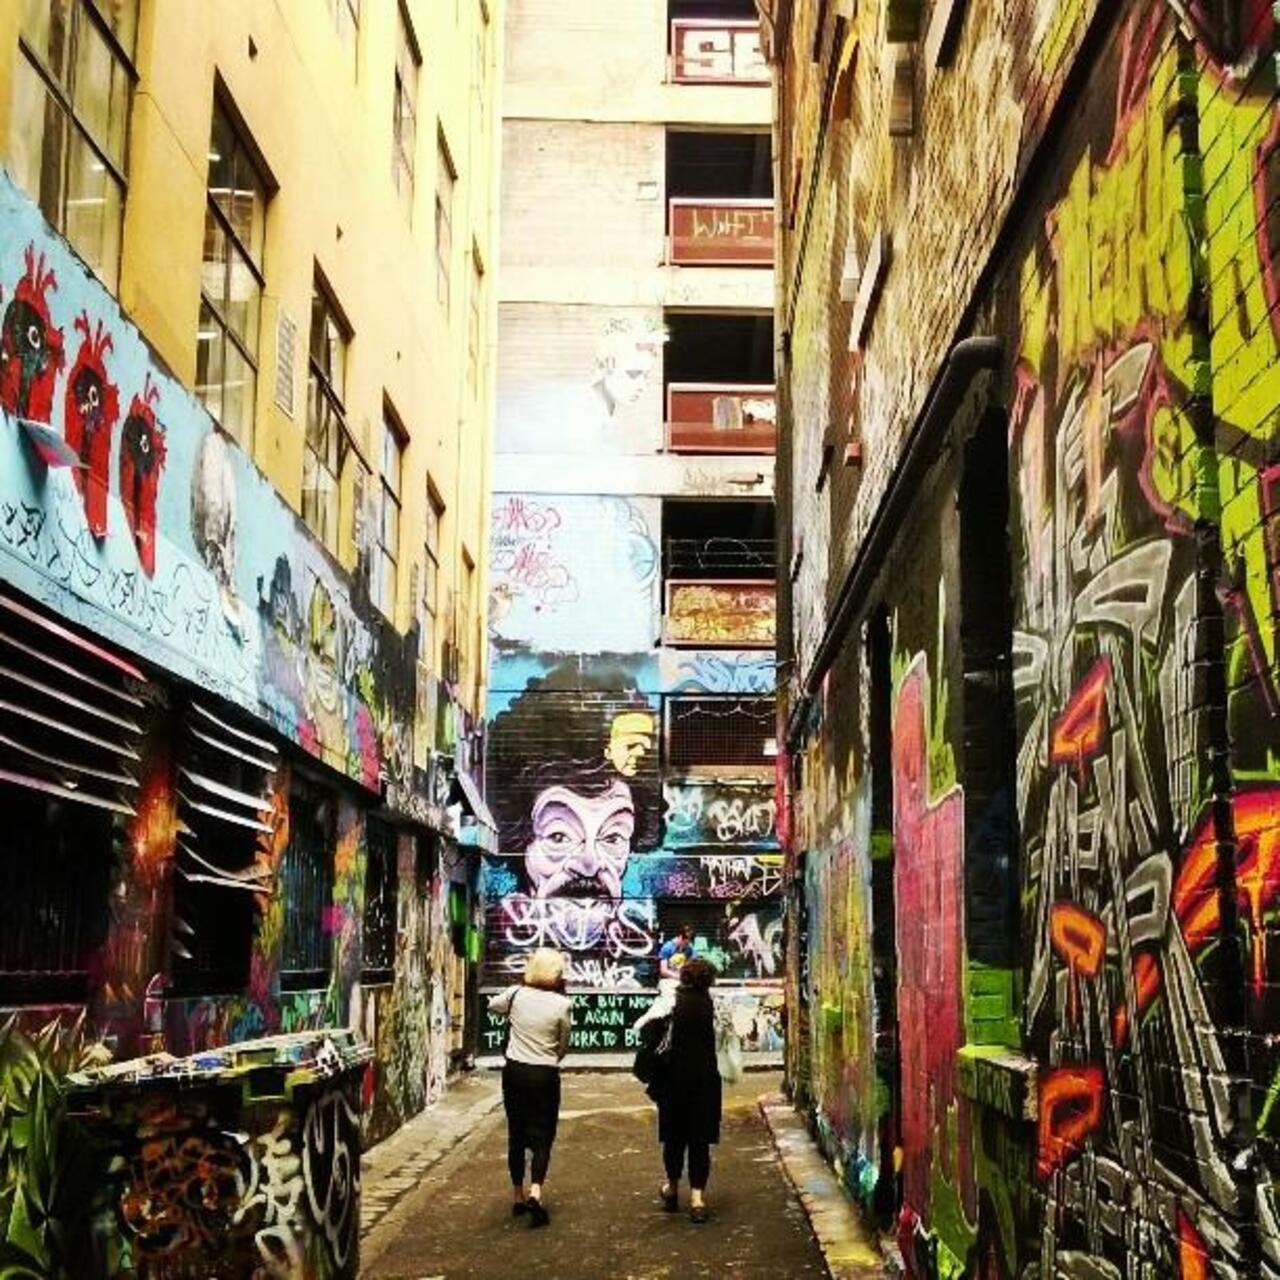 #Graffiti on the #streets of #Melbourne. #travel #art http://t.co/3pKCyErG6d